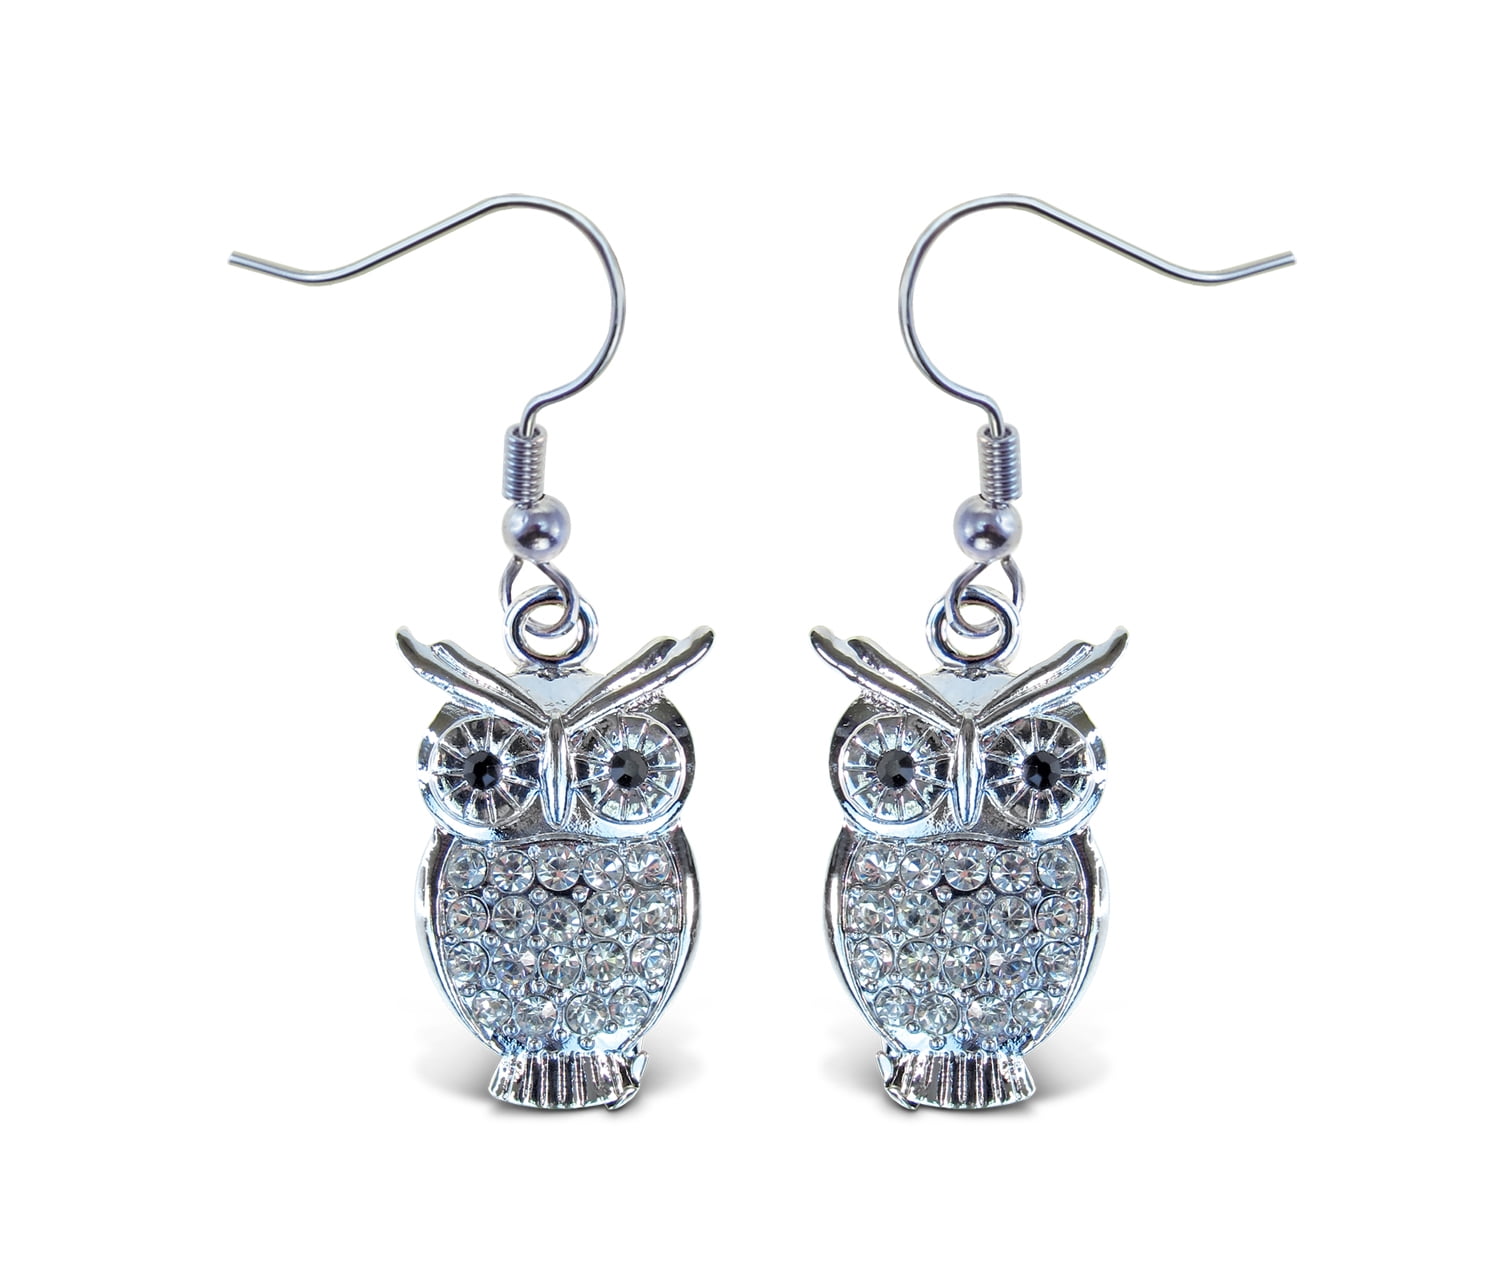 rhinestone EARRINGS Jewellery antiqued silver tone OWL bird 